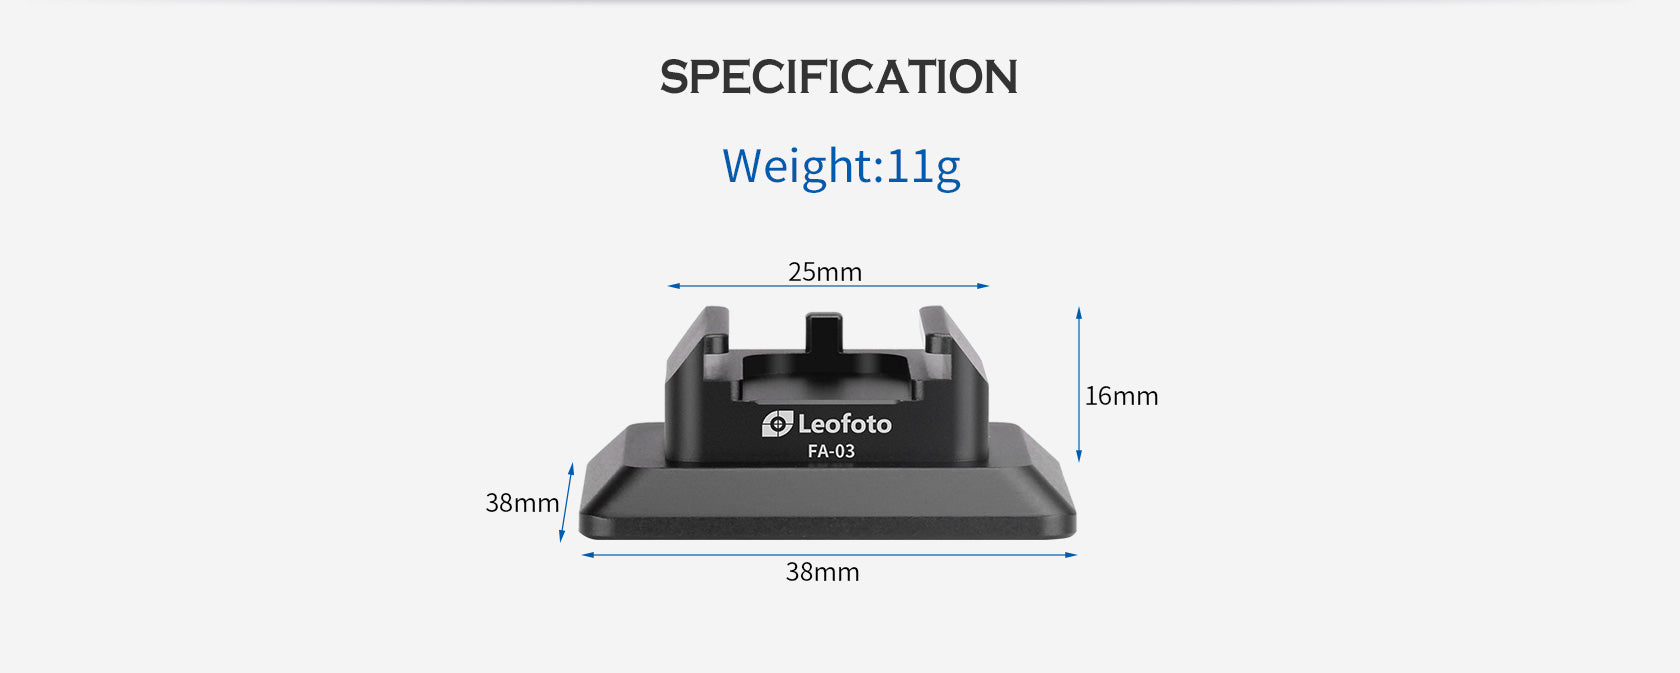 Leofoto FA-03 Flash Cold Shoe Conversion Adapter for ARCA Clamps